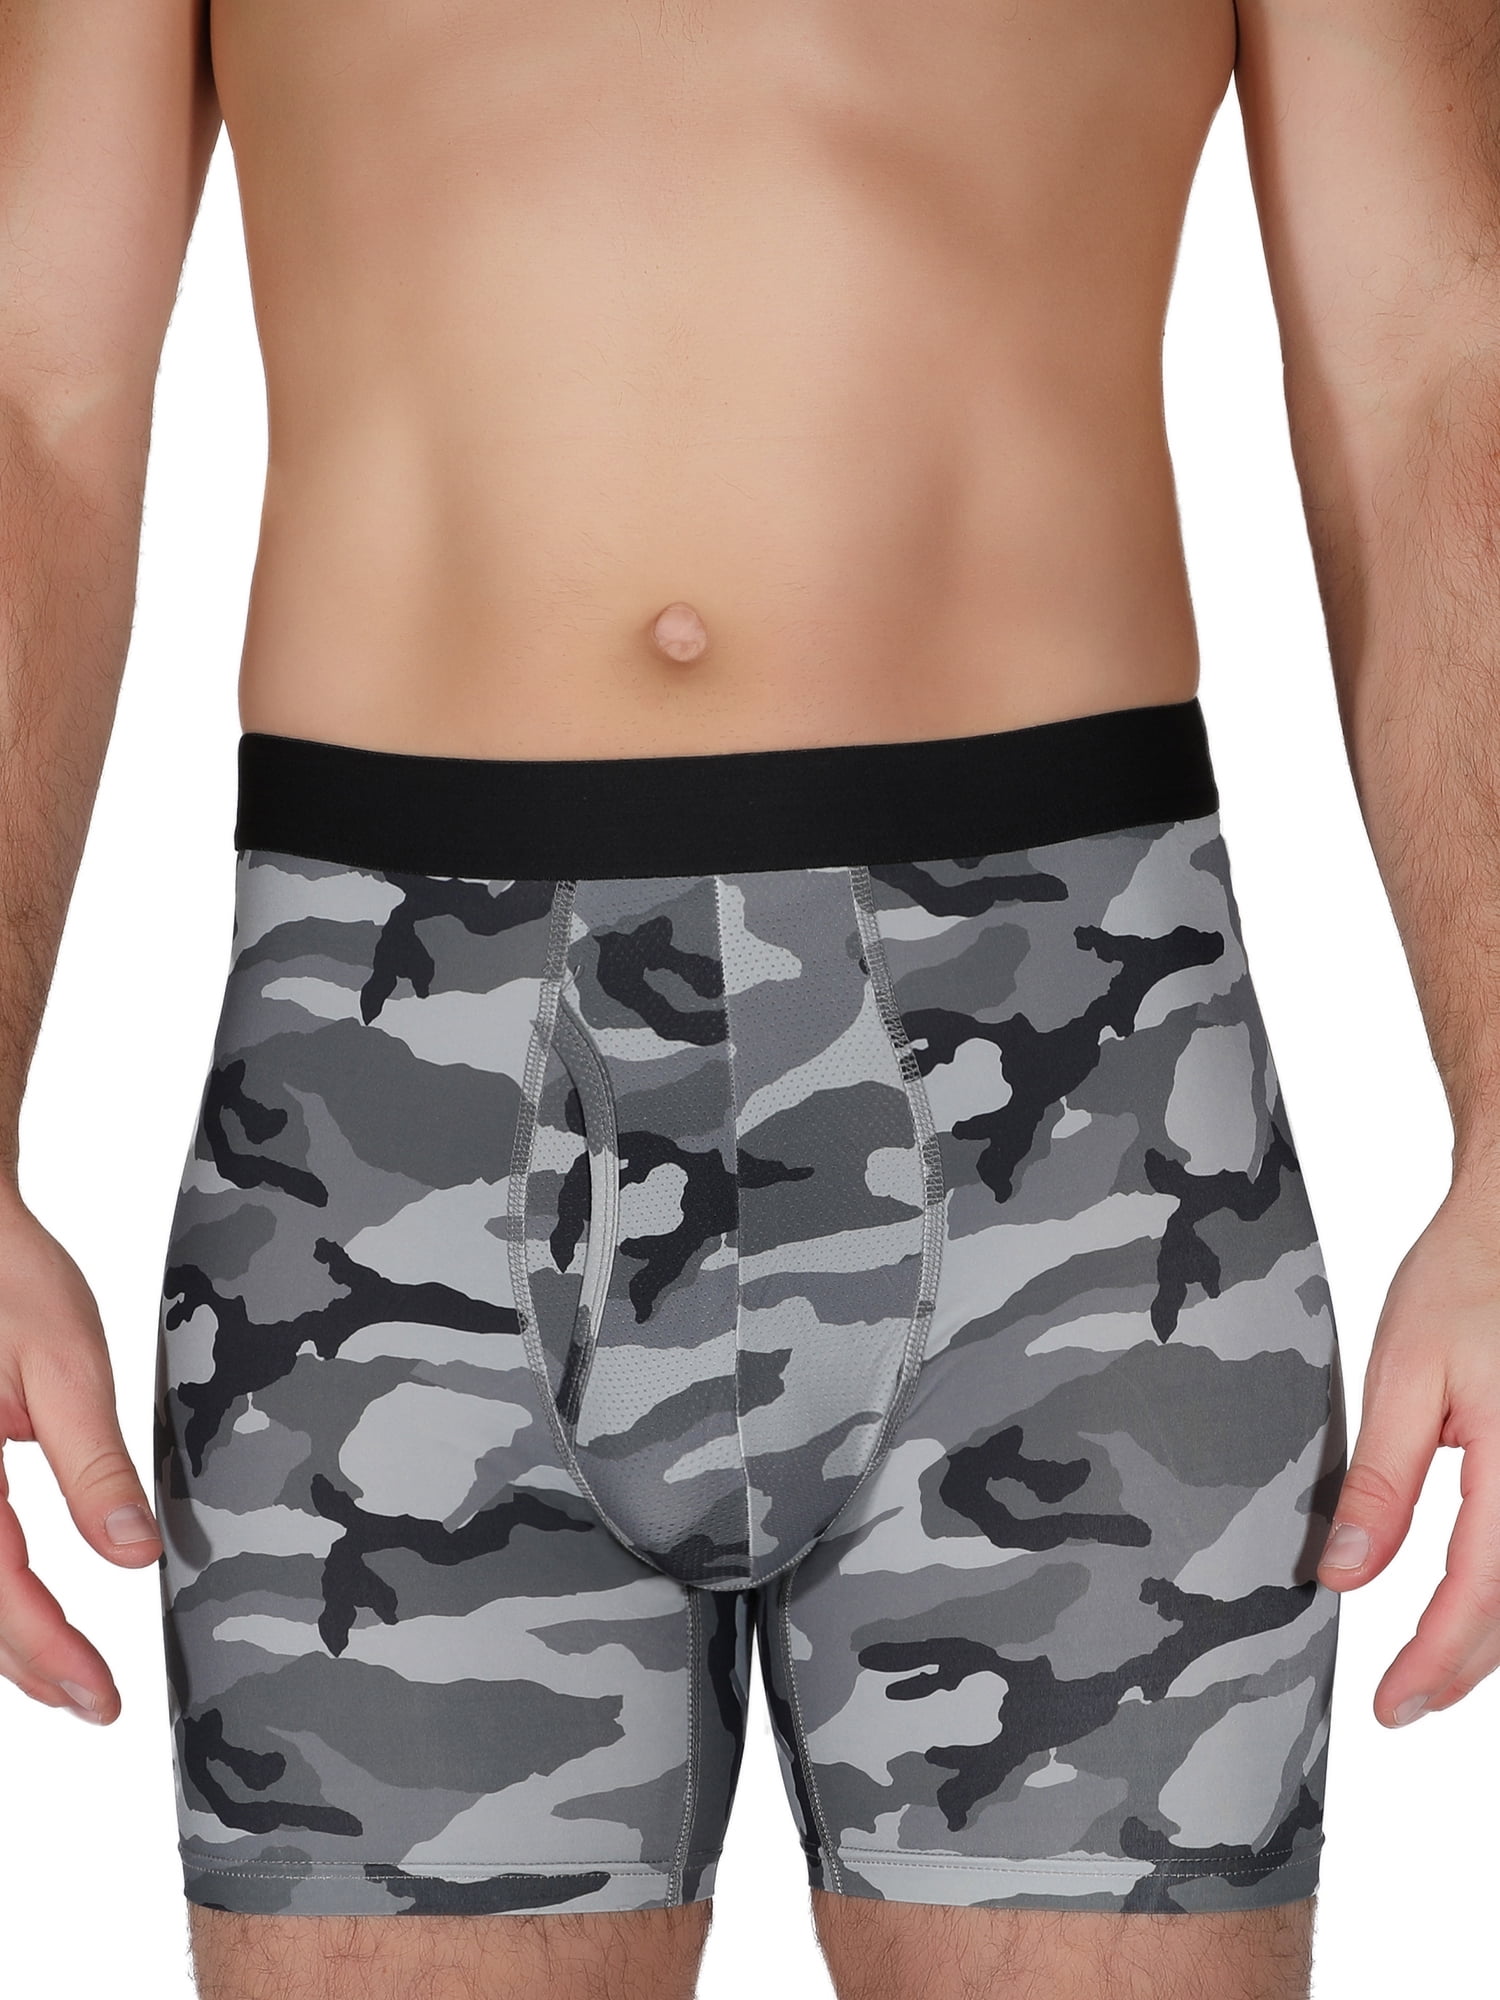 eywlwaar Men's Athletic Supporter Briefs Jockstrap Underwear Elastic Nylon  Pouch Bikini Briefs 3PCS at  Men's Clothing store